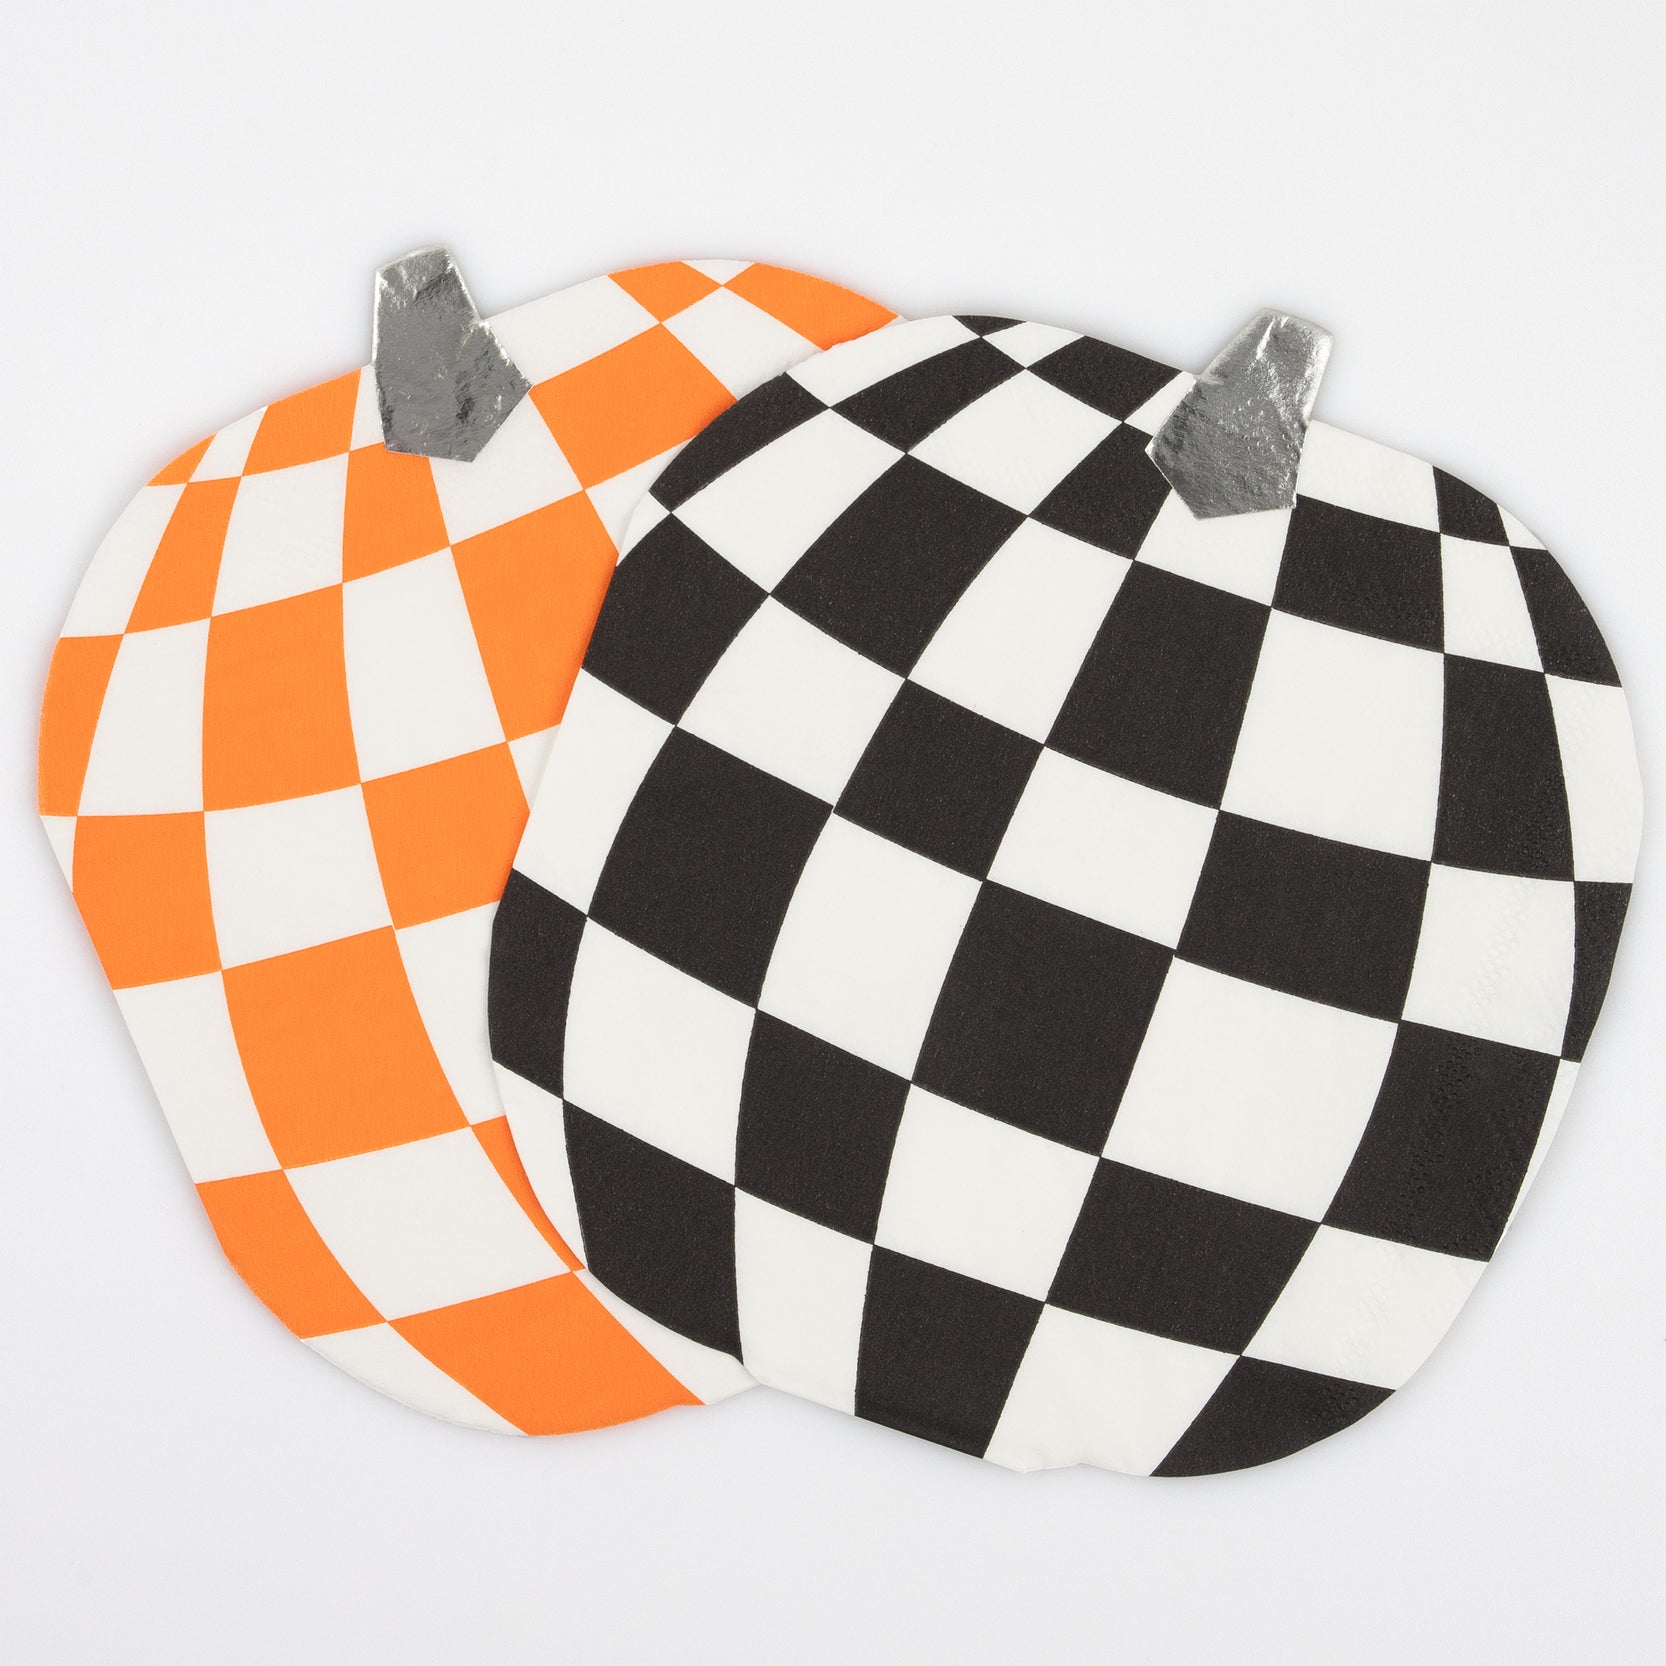 Two Mod Pumpkin Napkins, one black and white check, one orange and white check